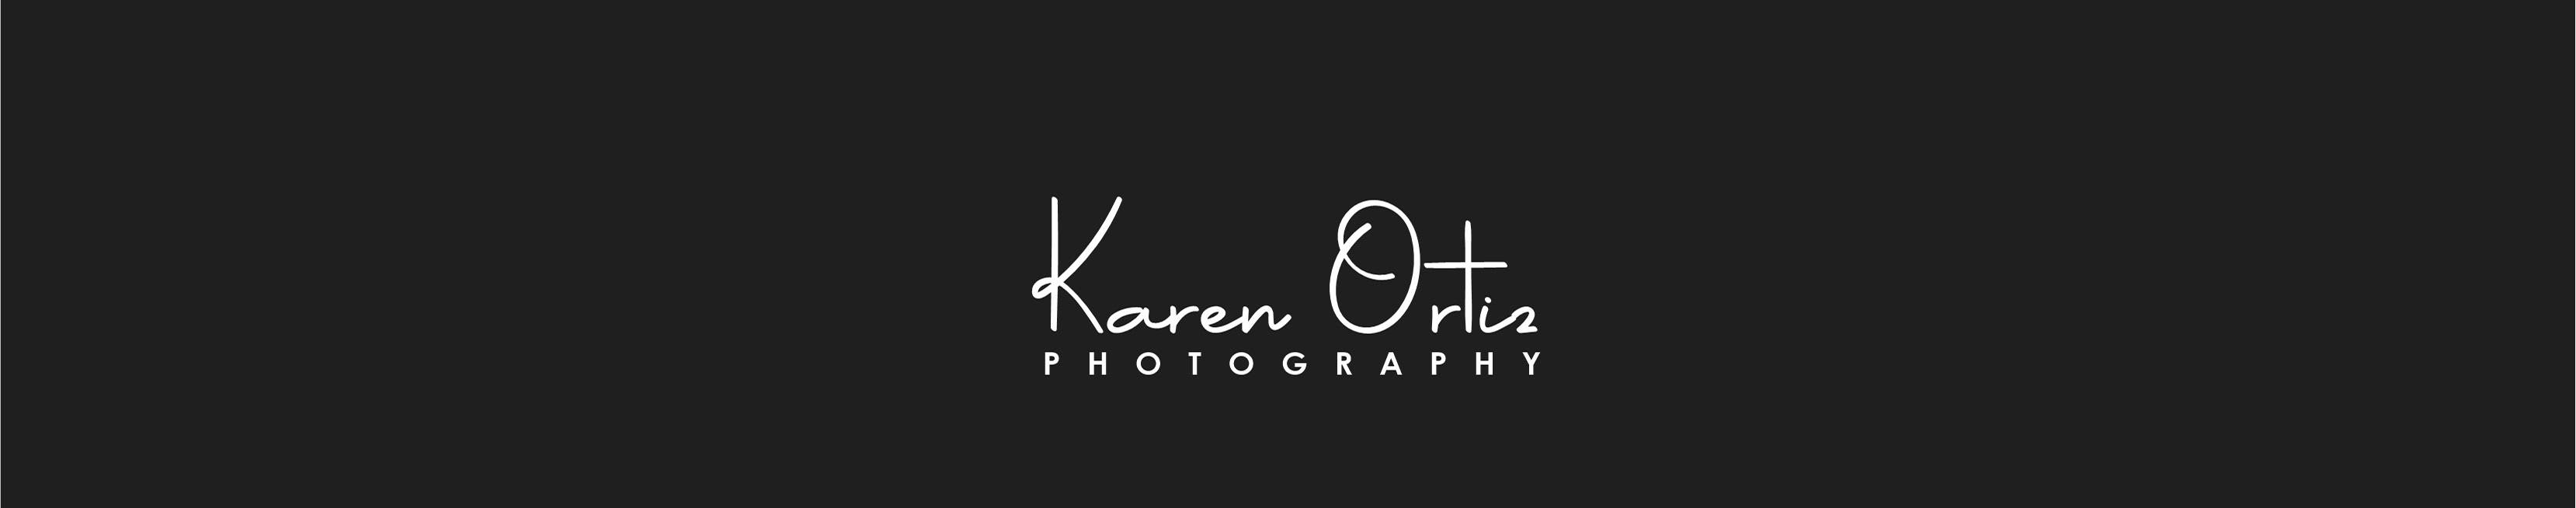 Karen Ortiz Photography's profile banner